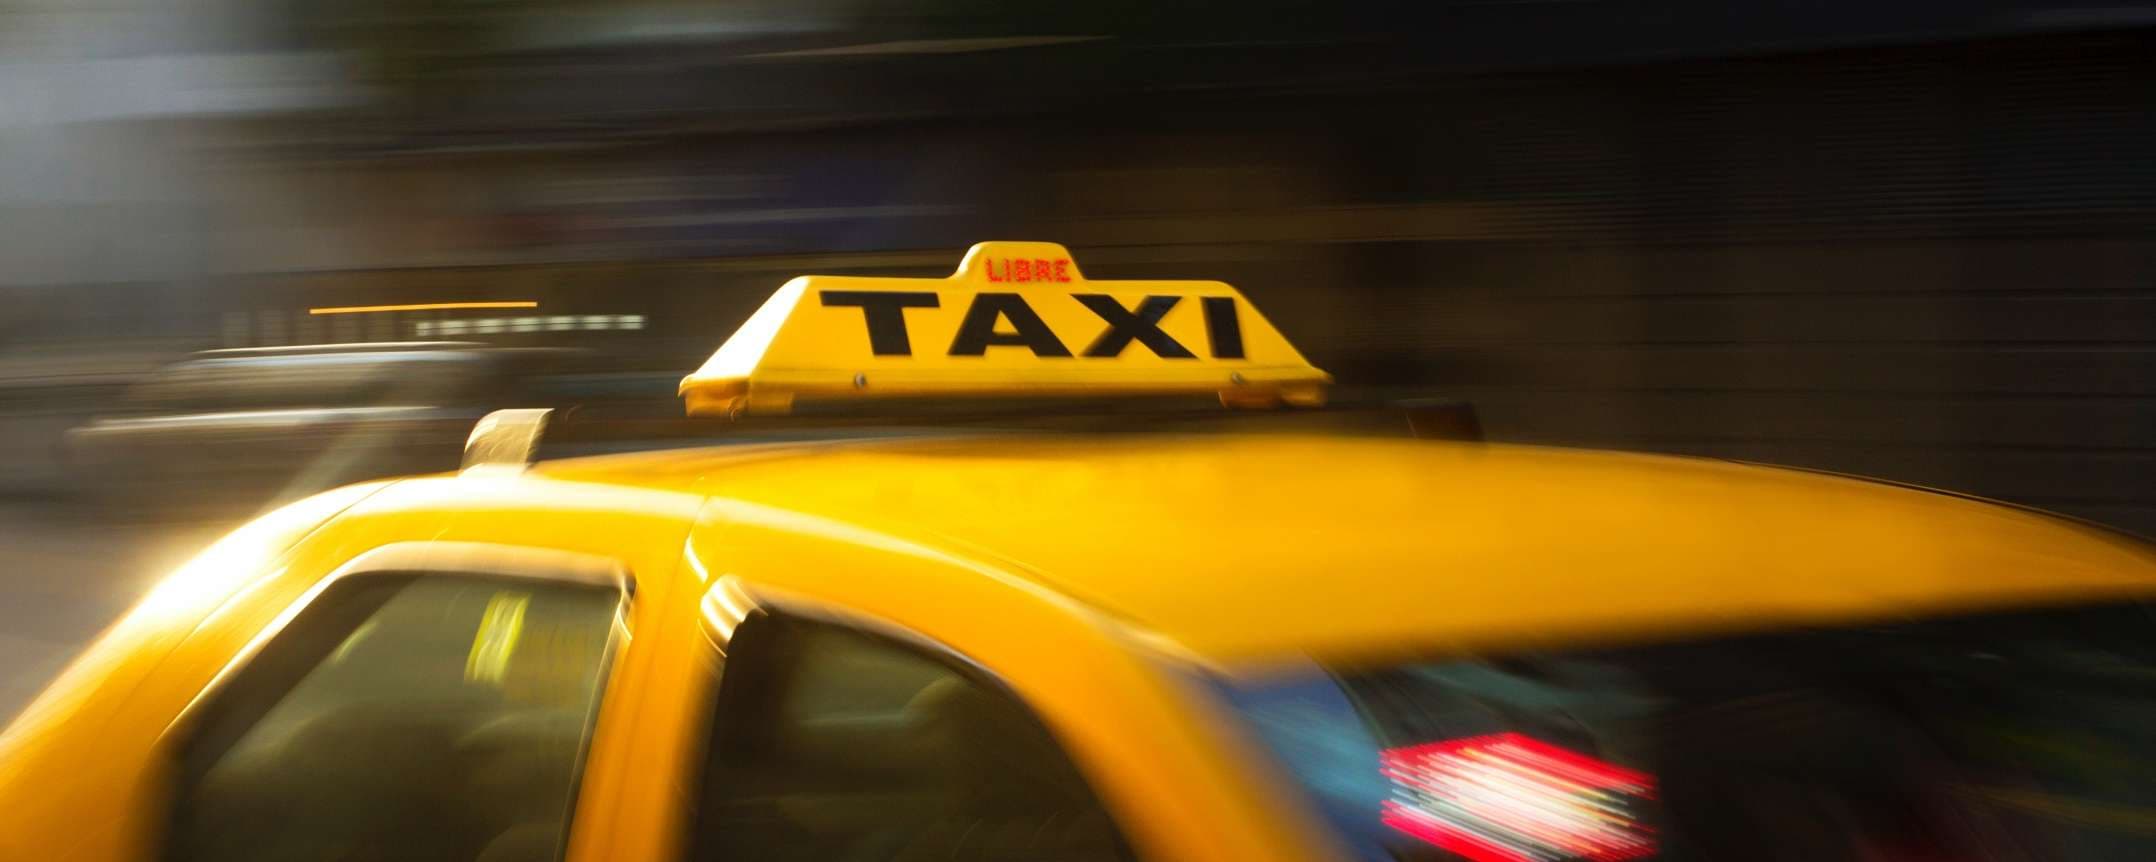 Optimus Taxi Service